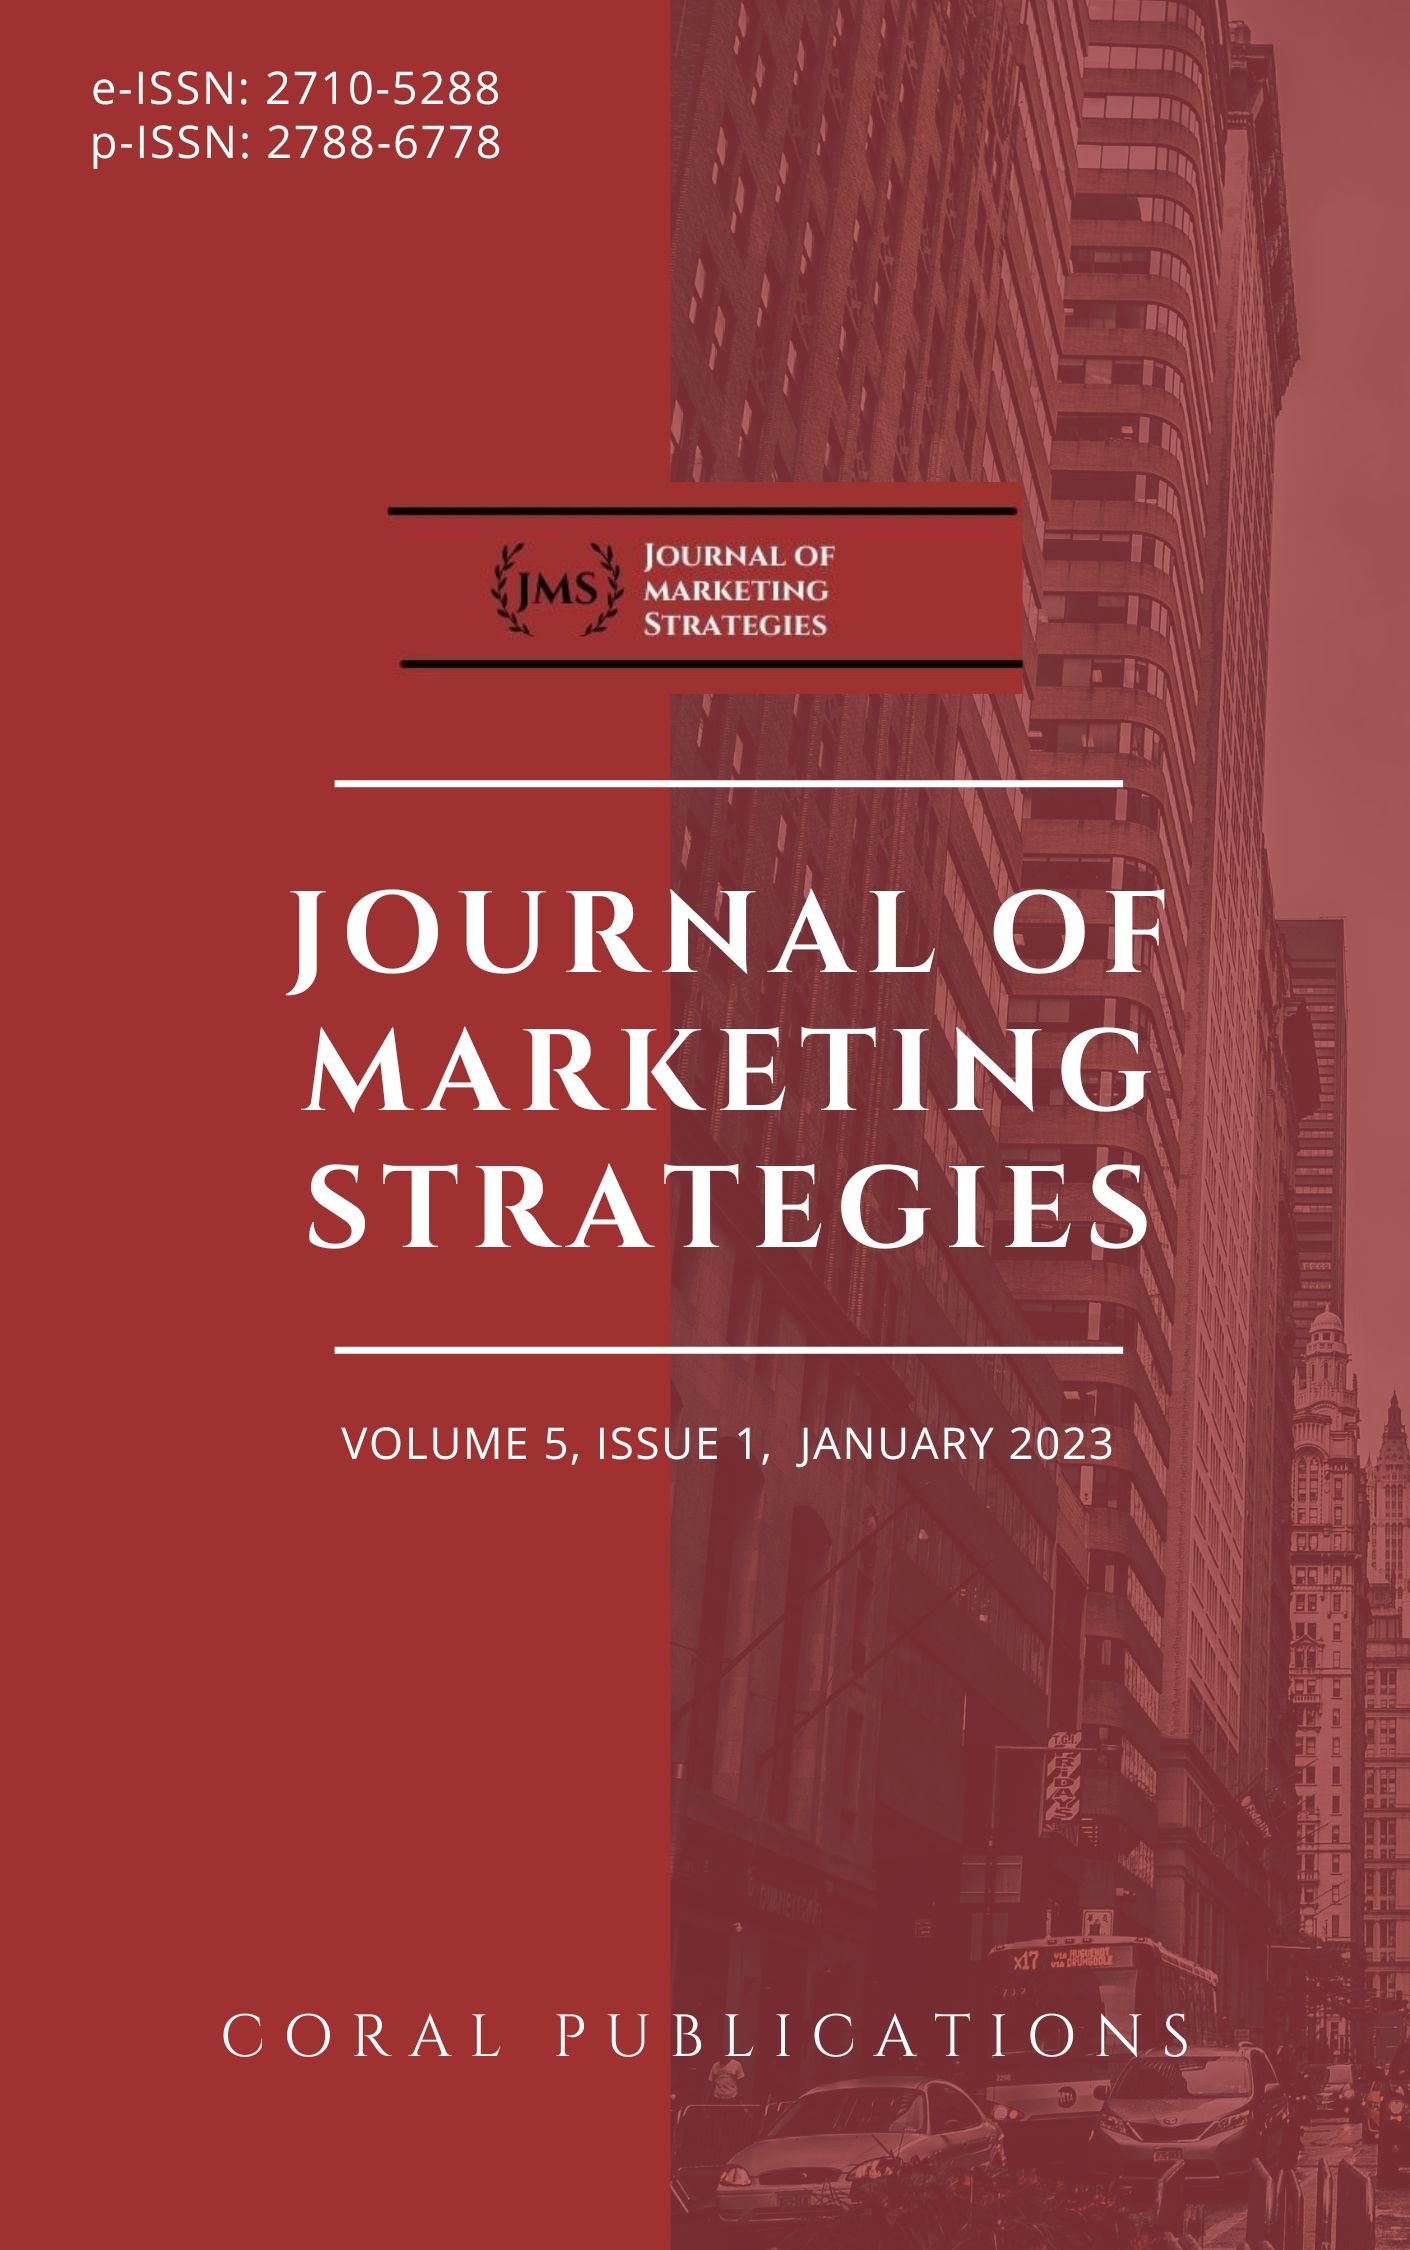 					View Vol. 5 No. 1 (2023): Journal of Marketing Strategies - January 2023
				